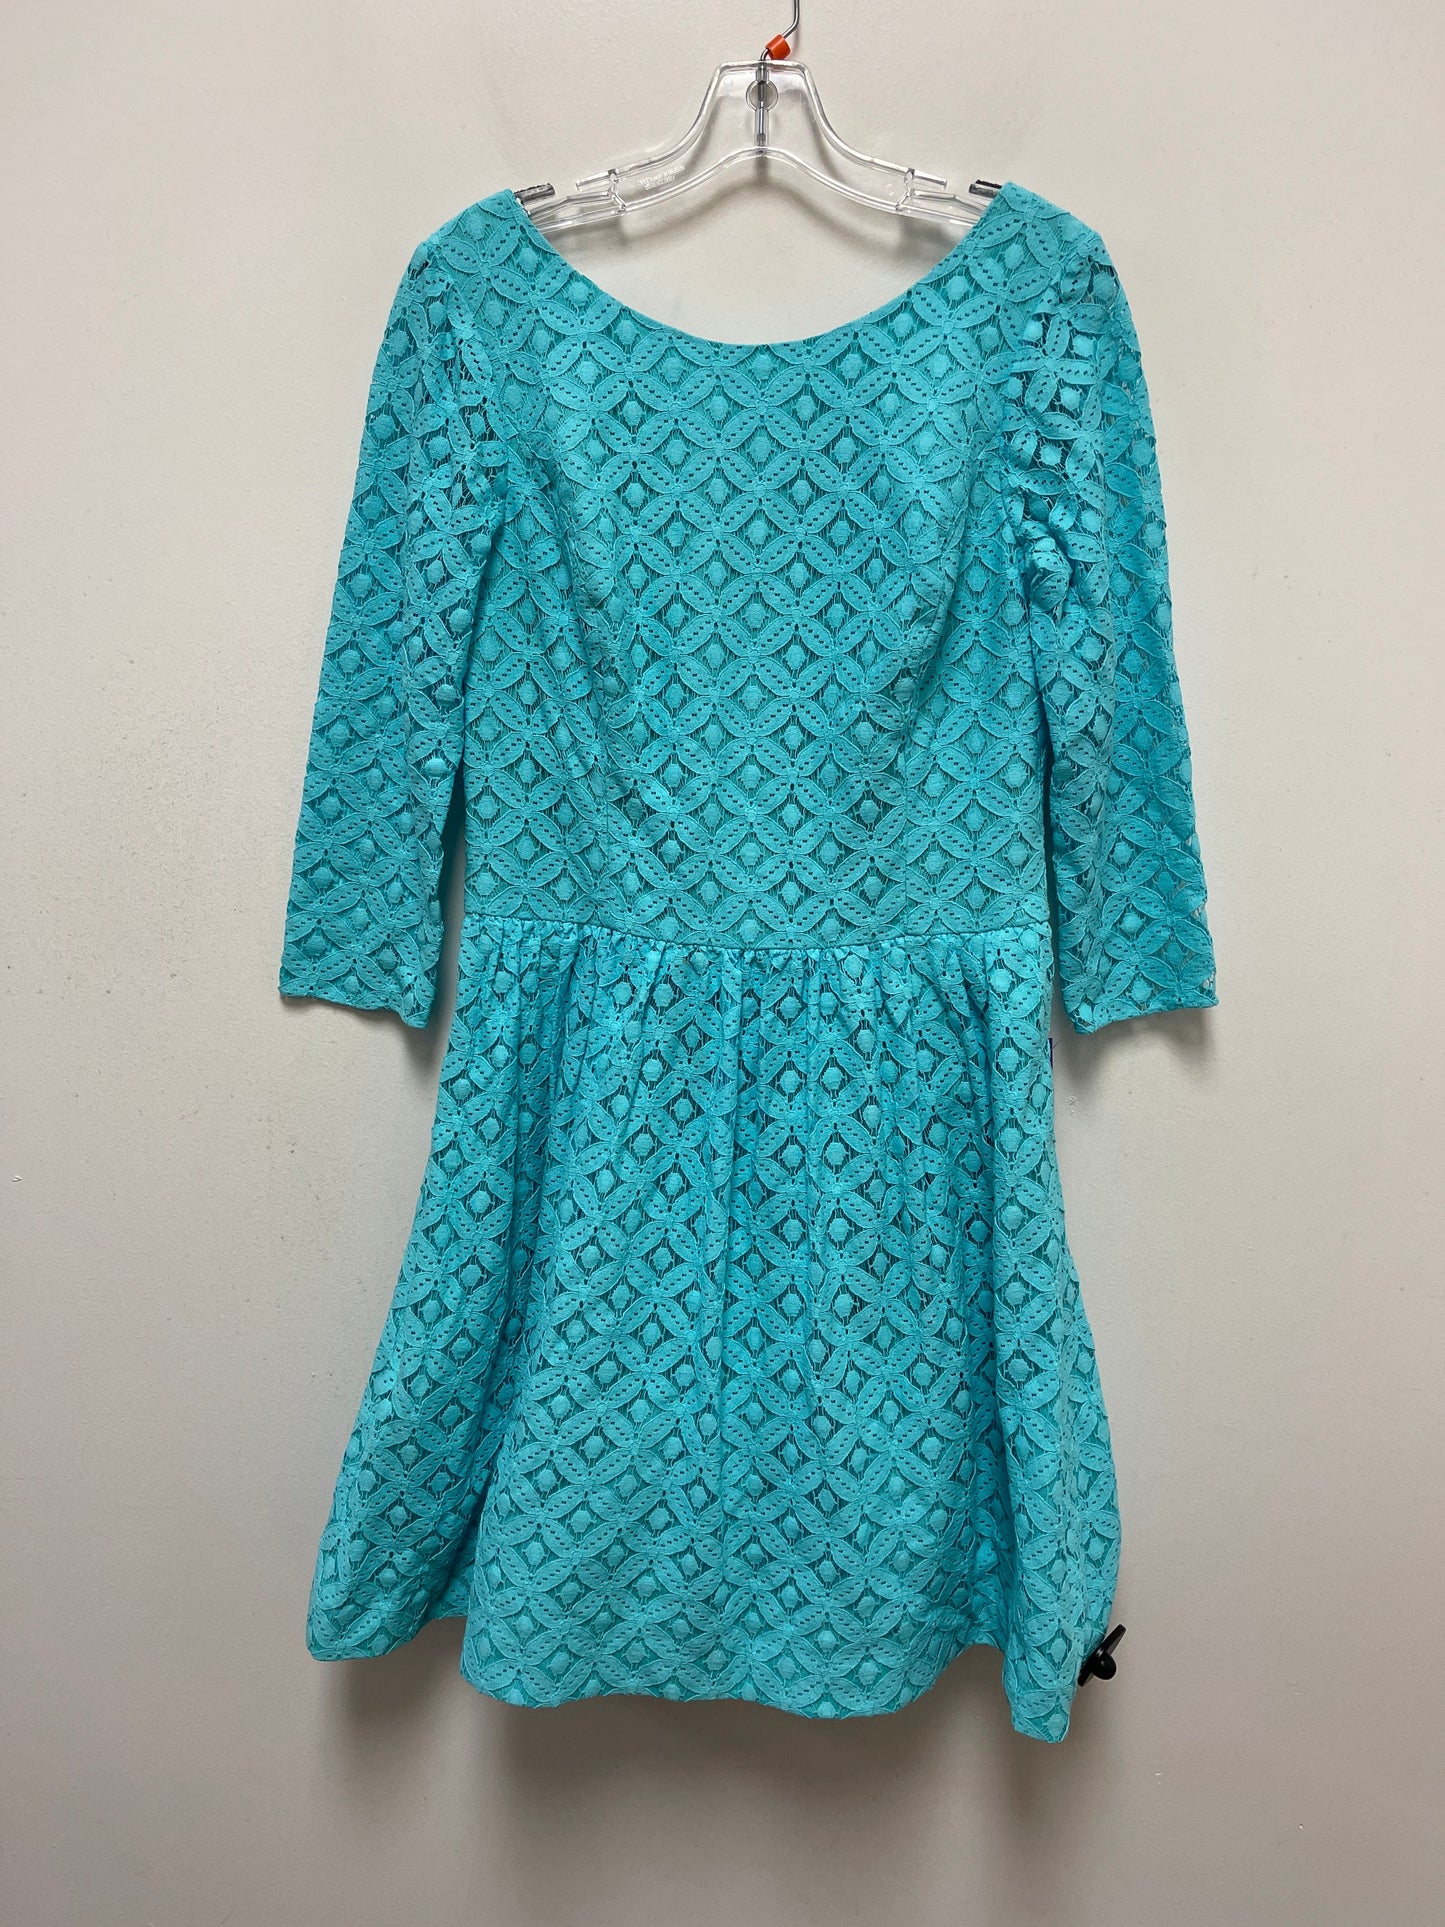 Blue Dress Designer Lilly Pulitzer, Size M